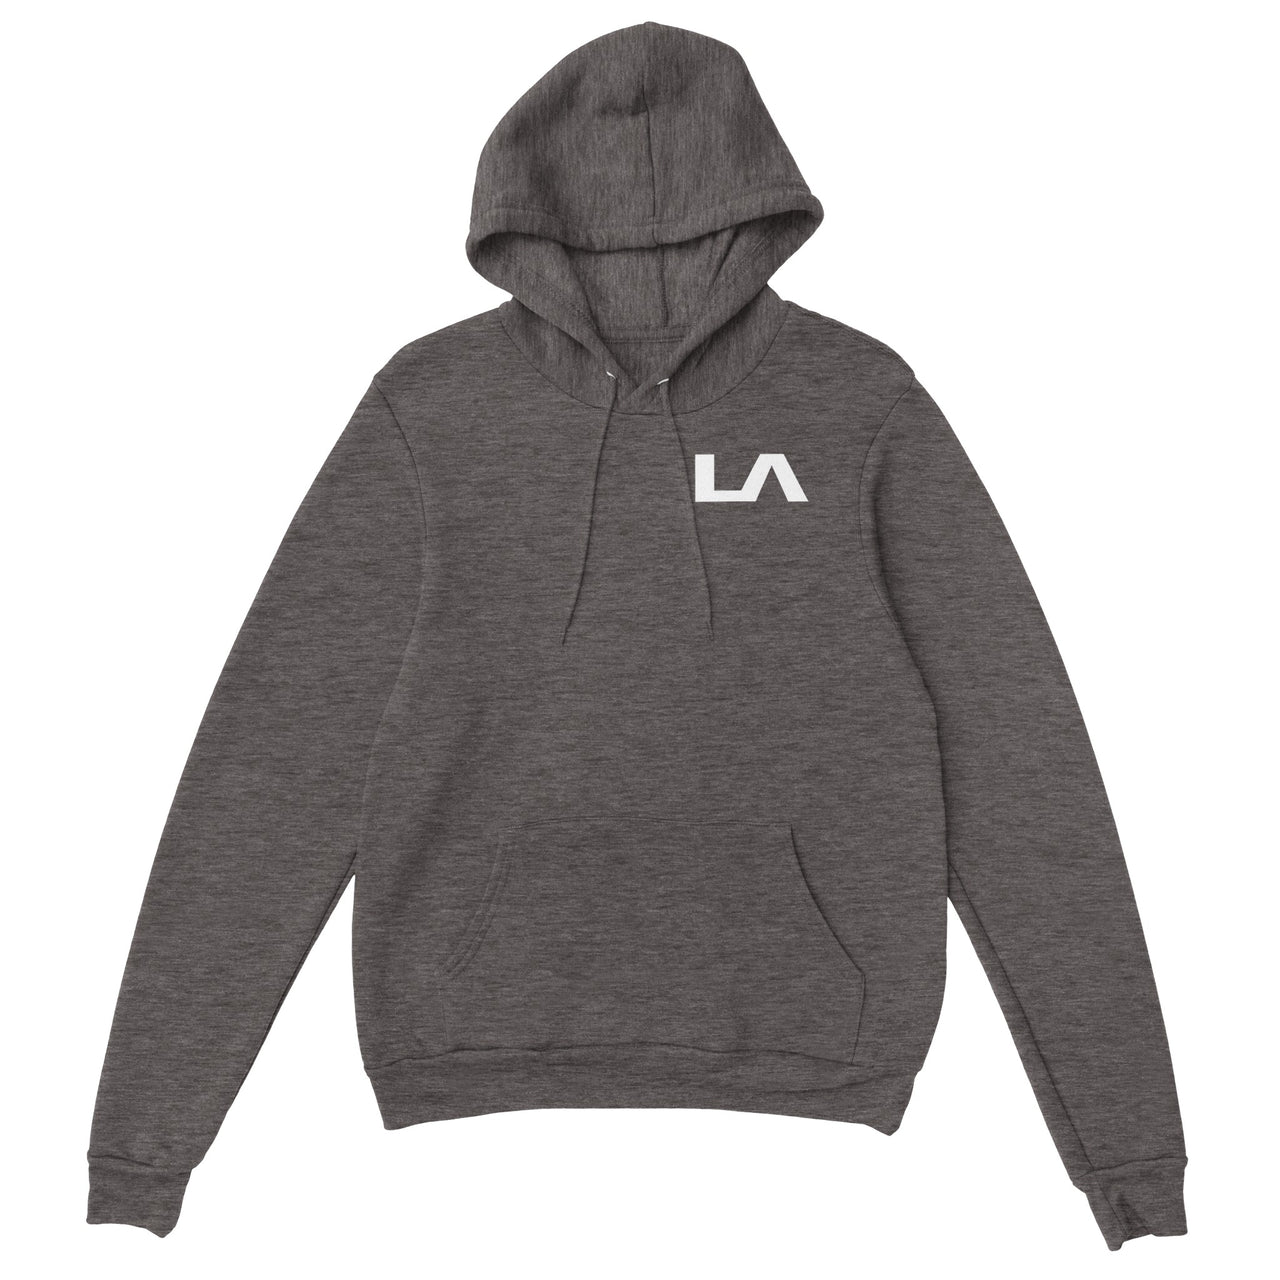 LA by LA MUSCLE Premium Unisex Pullover Hoodie